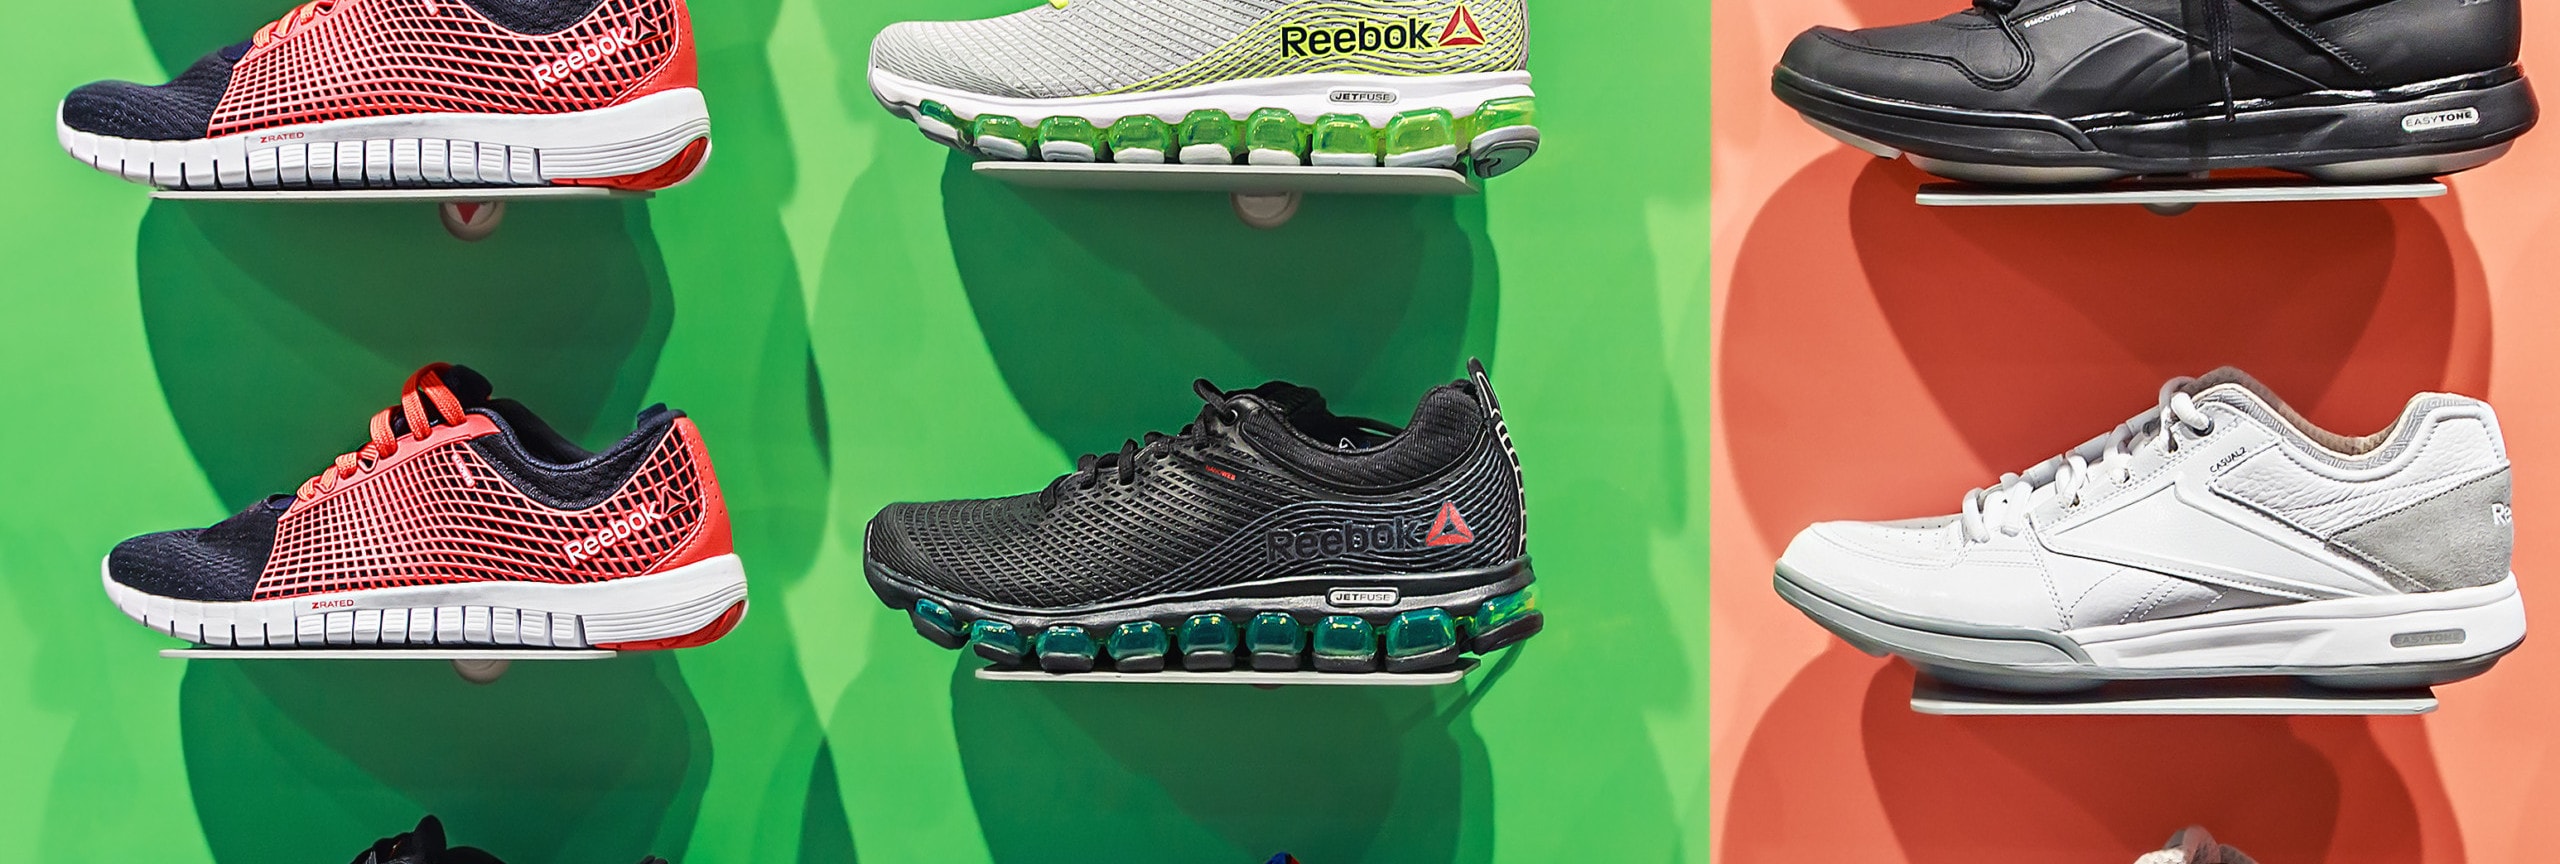 Aplicando toque Oh Adidas Acquires Reebok, Closes Gap on Nike | Brand Finance